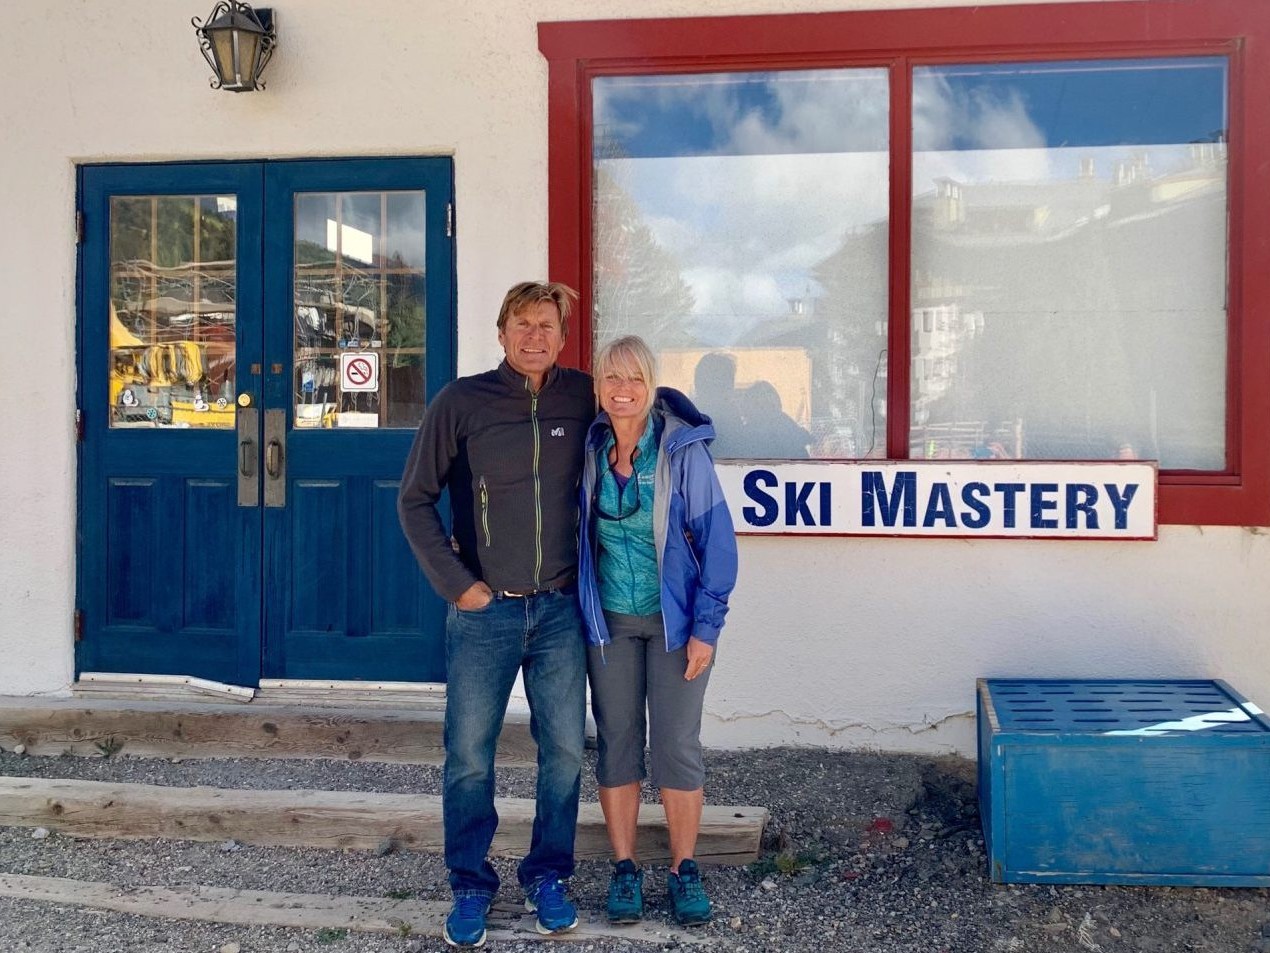 Le Ski Mastery shop owners